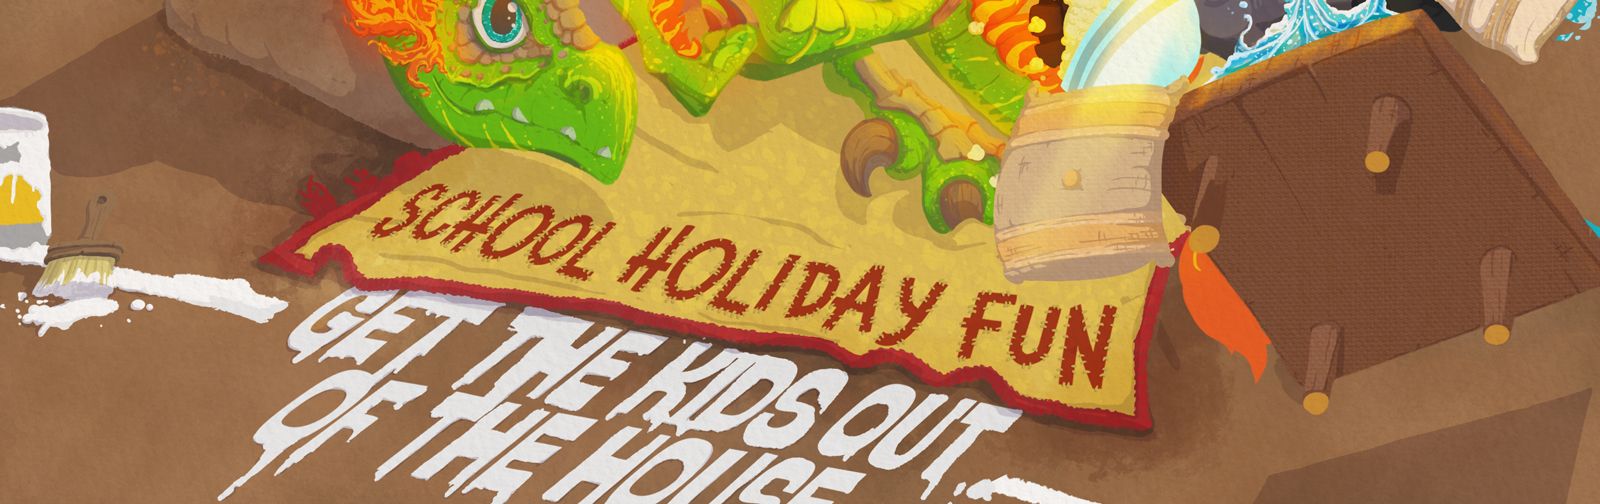 School Holiday Fun banner image